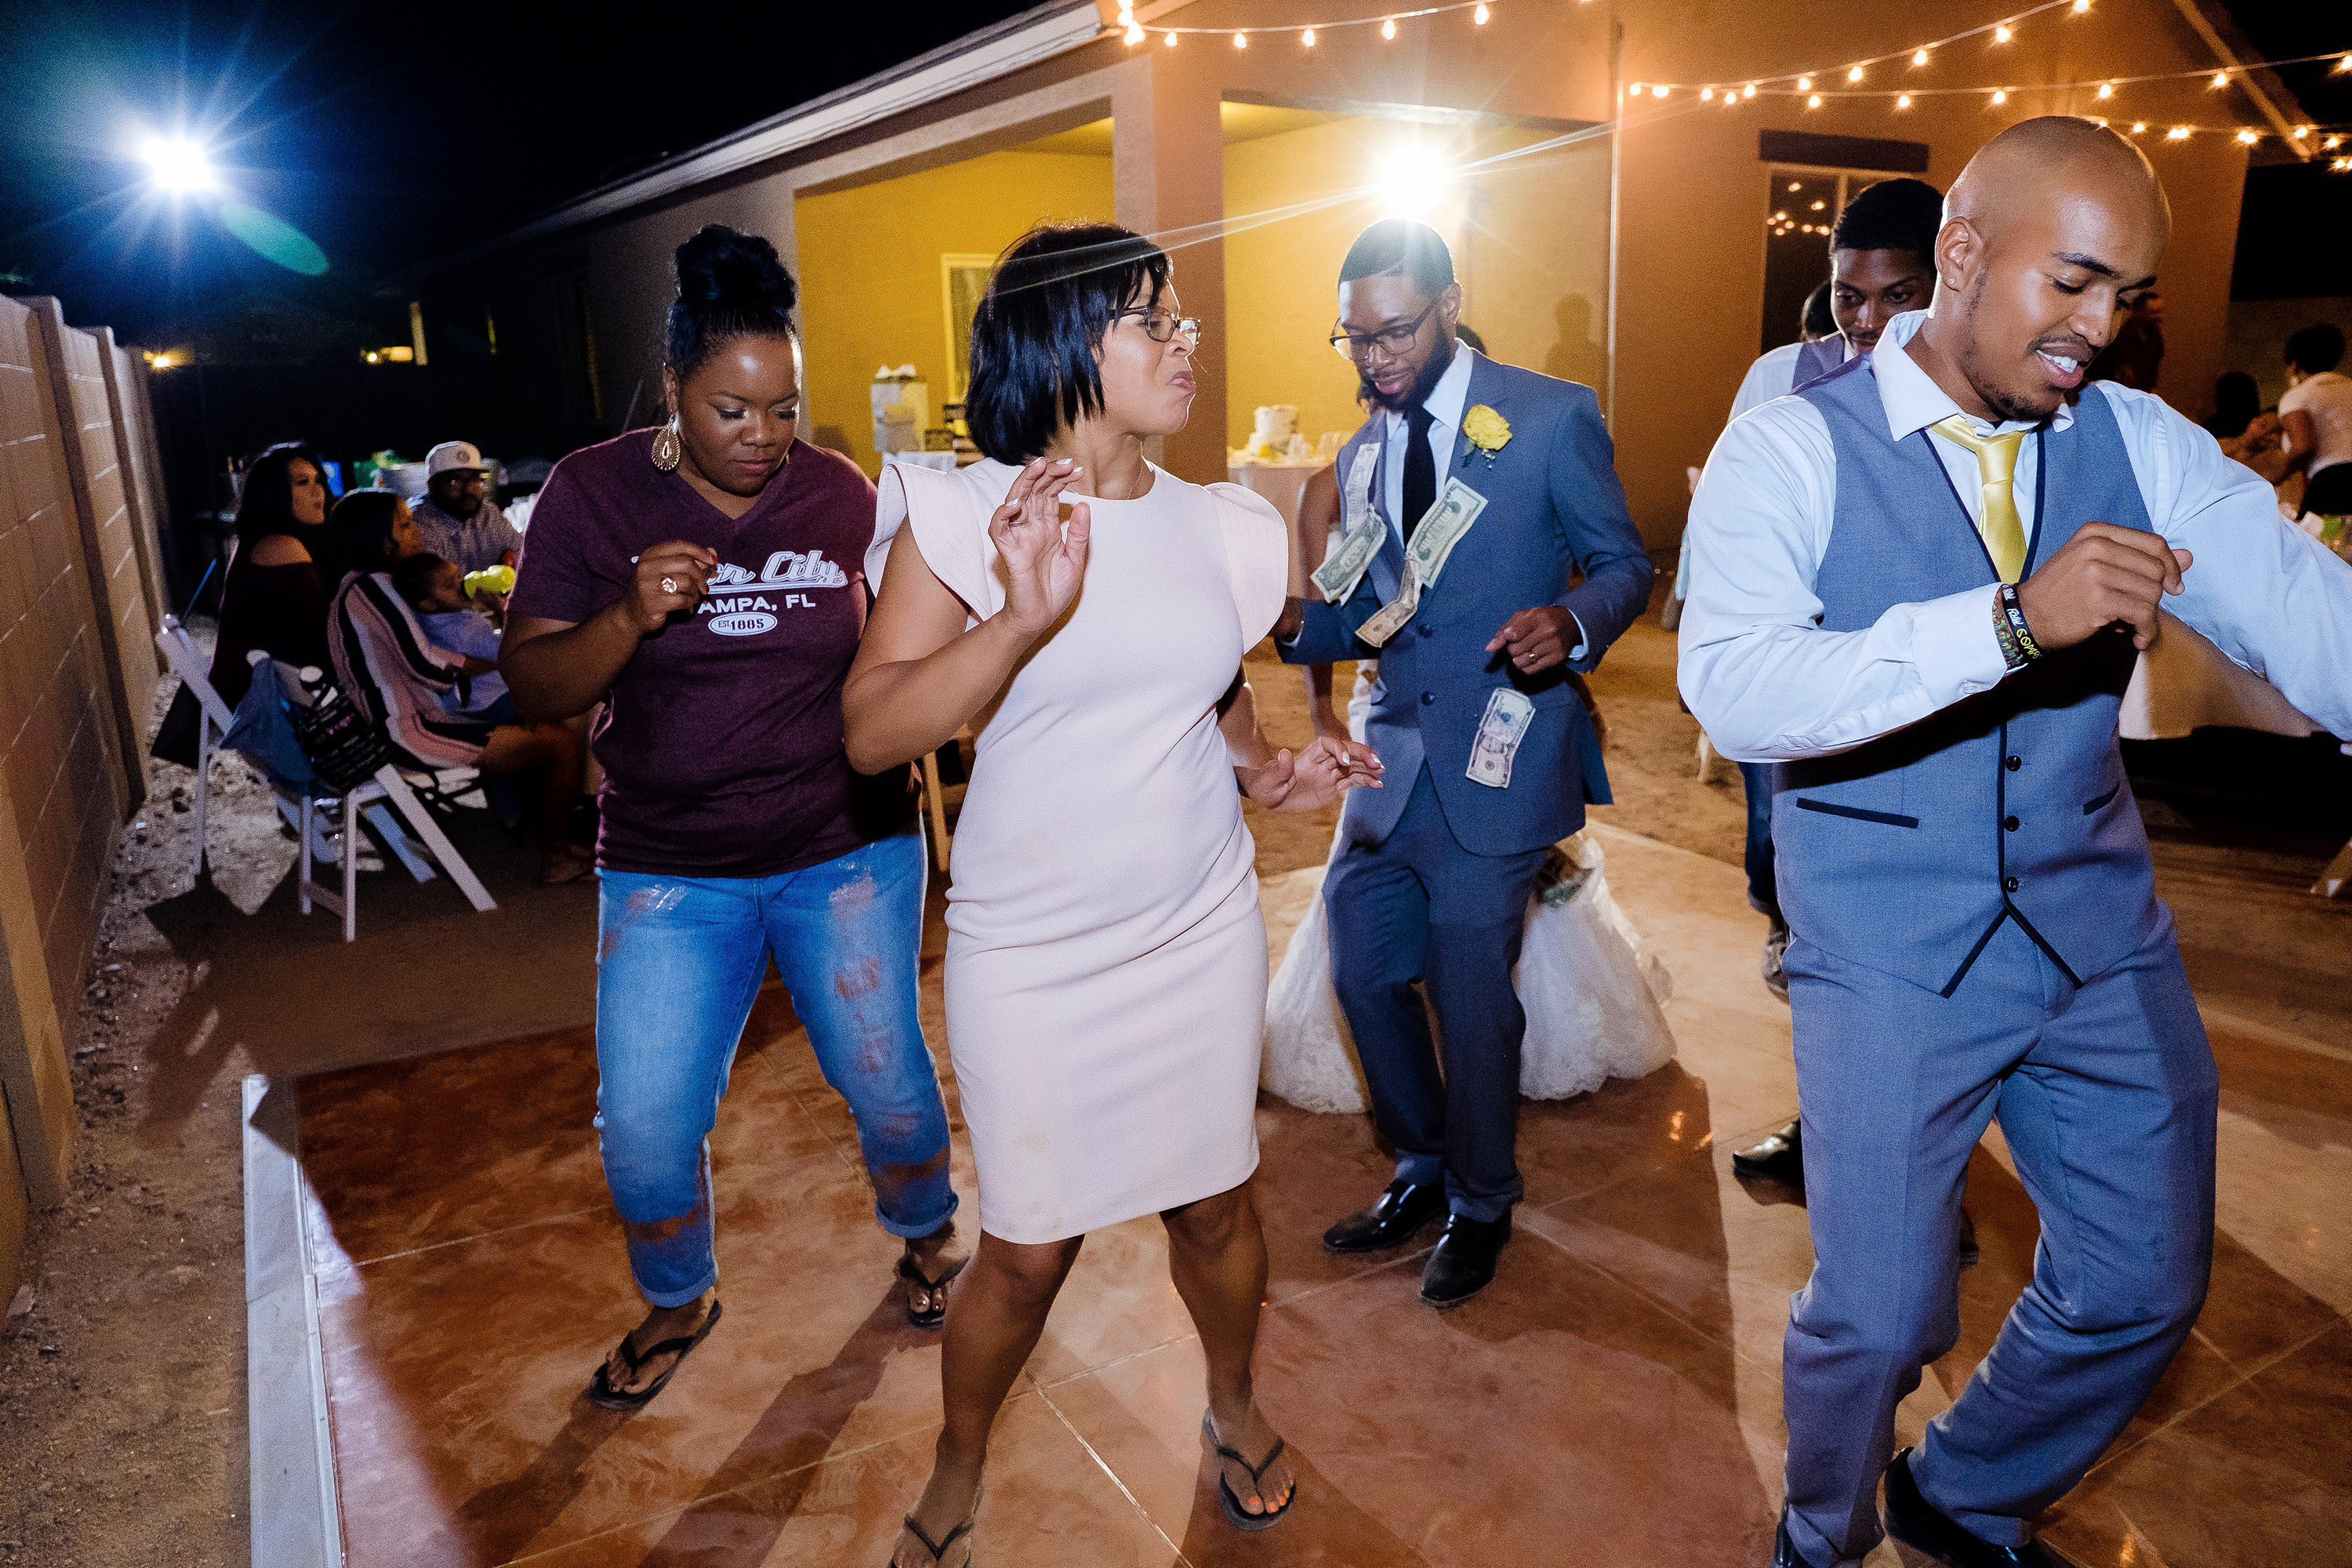 Line dancing at a backyard wedding reception in Phoenix